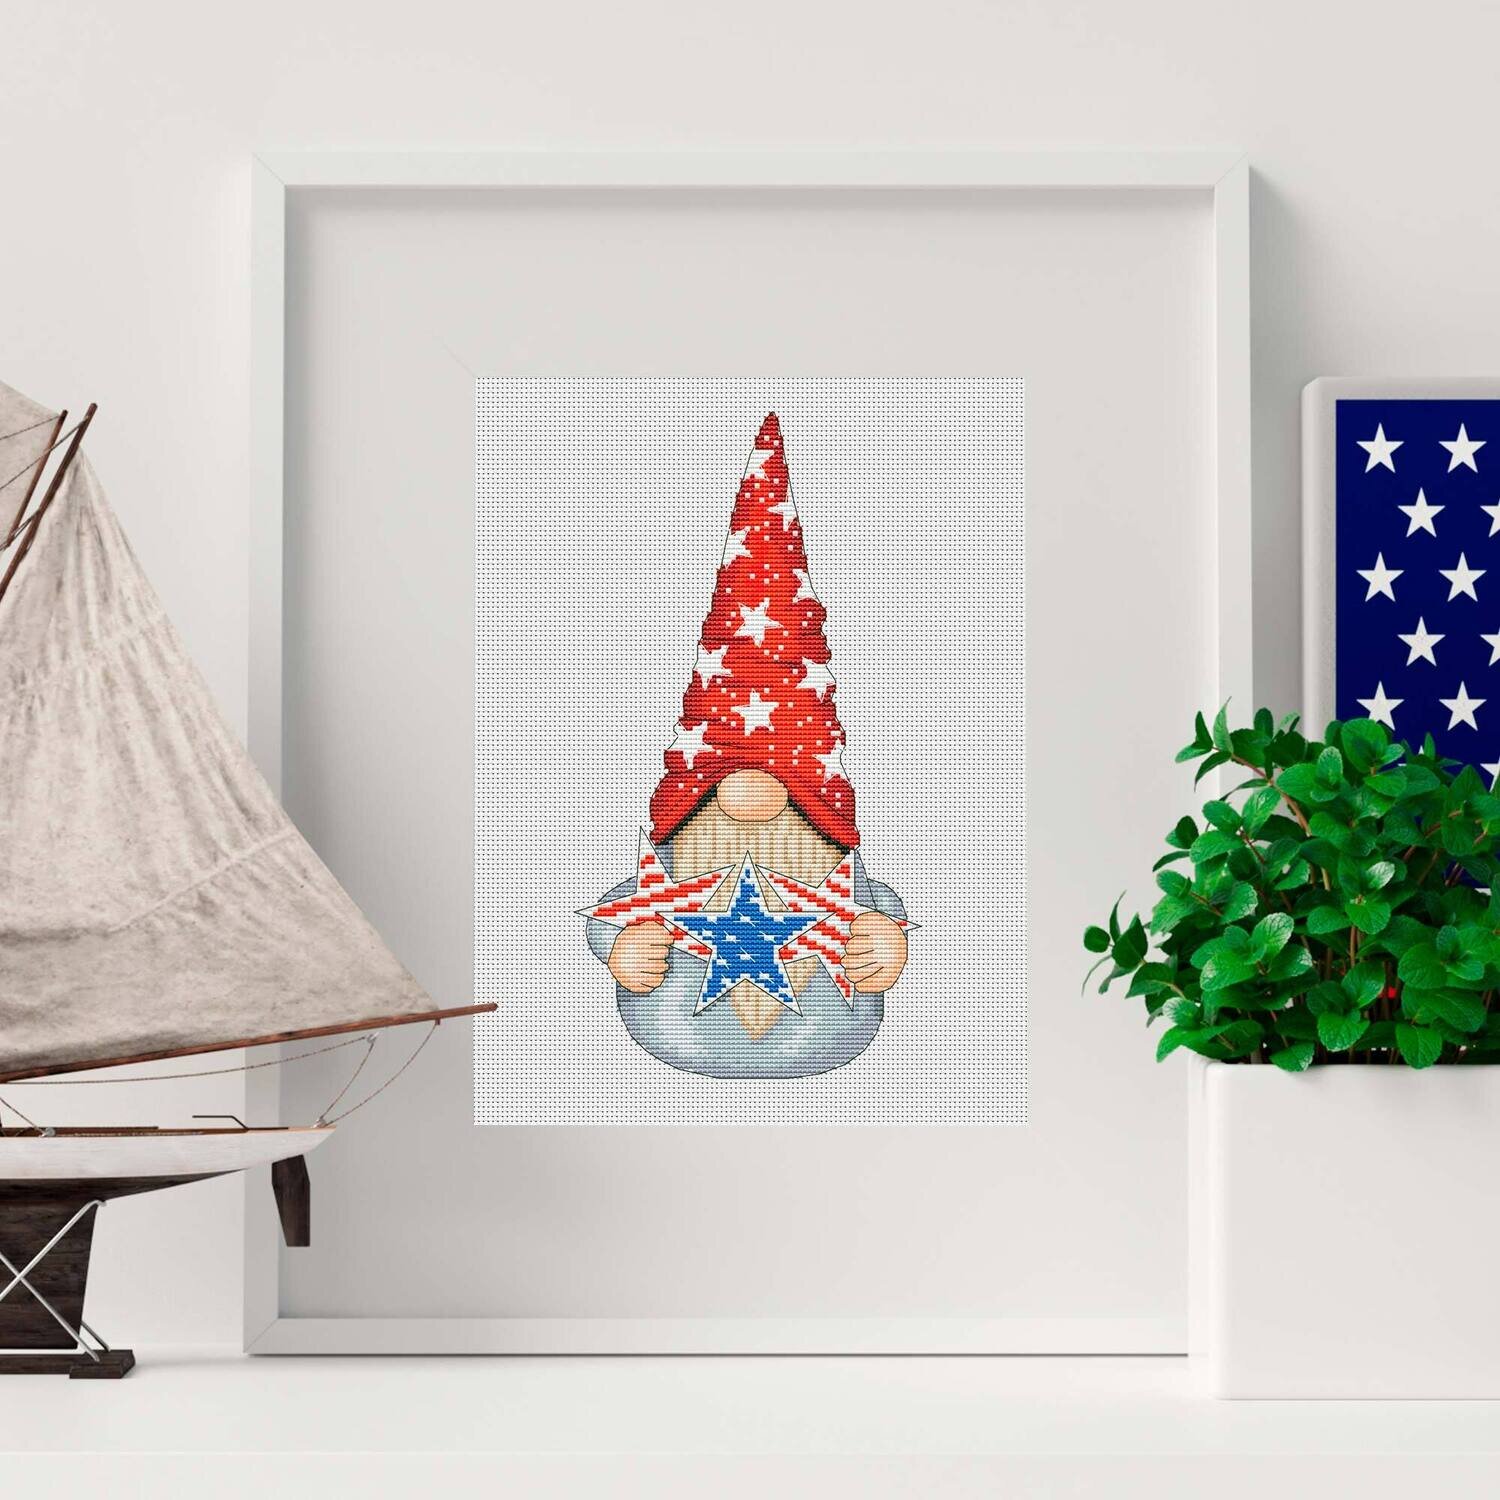 Patriotic gnome, Cross stitch pattern, DIY Independence Day, Modern cross stitch